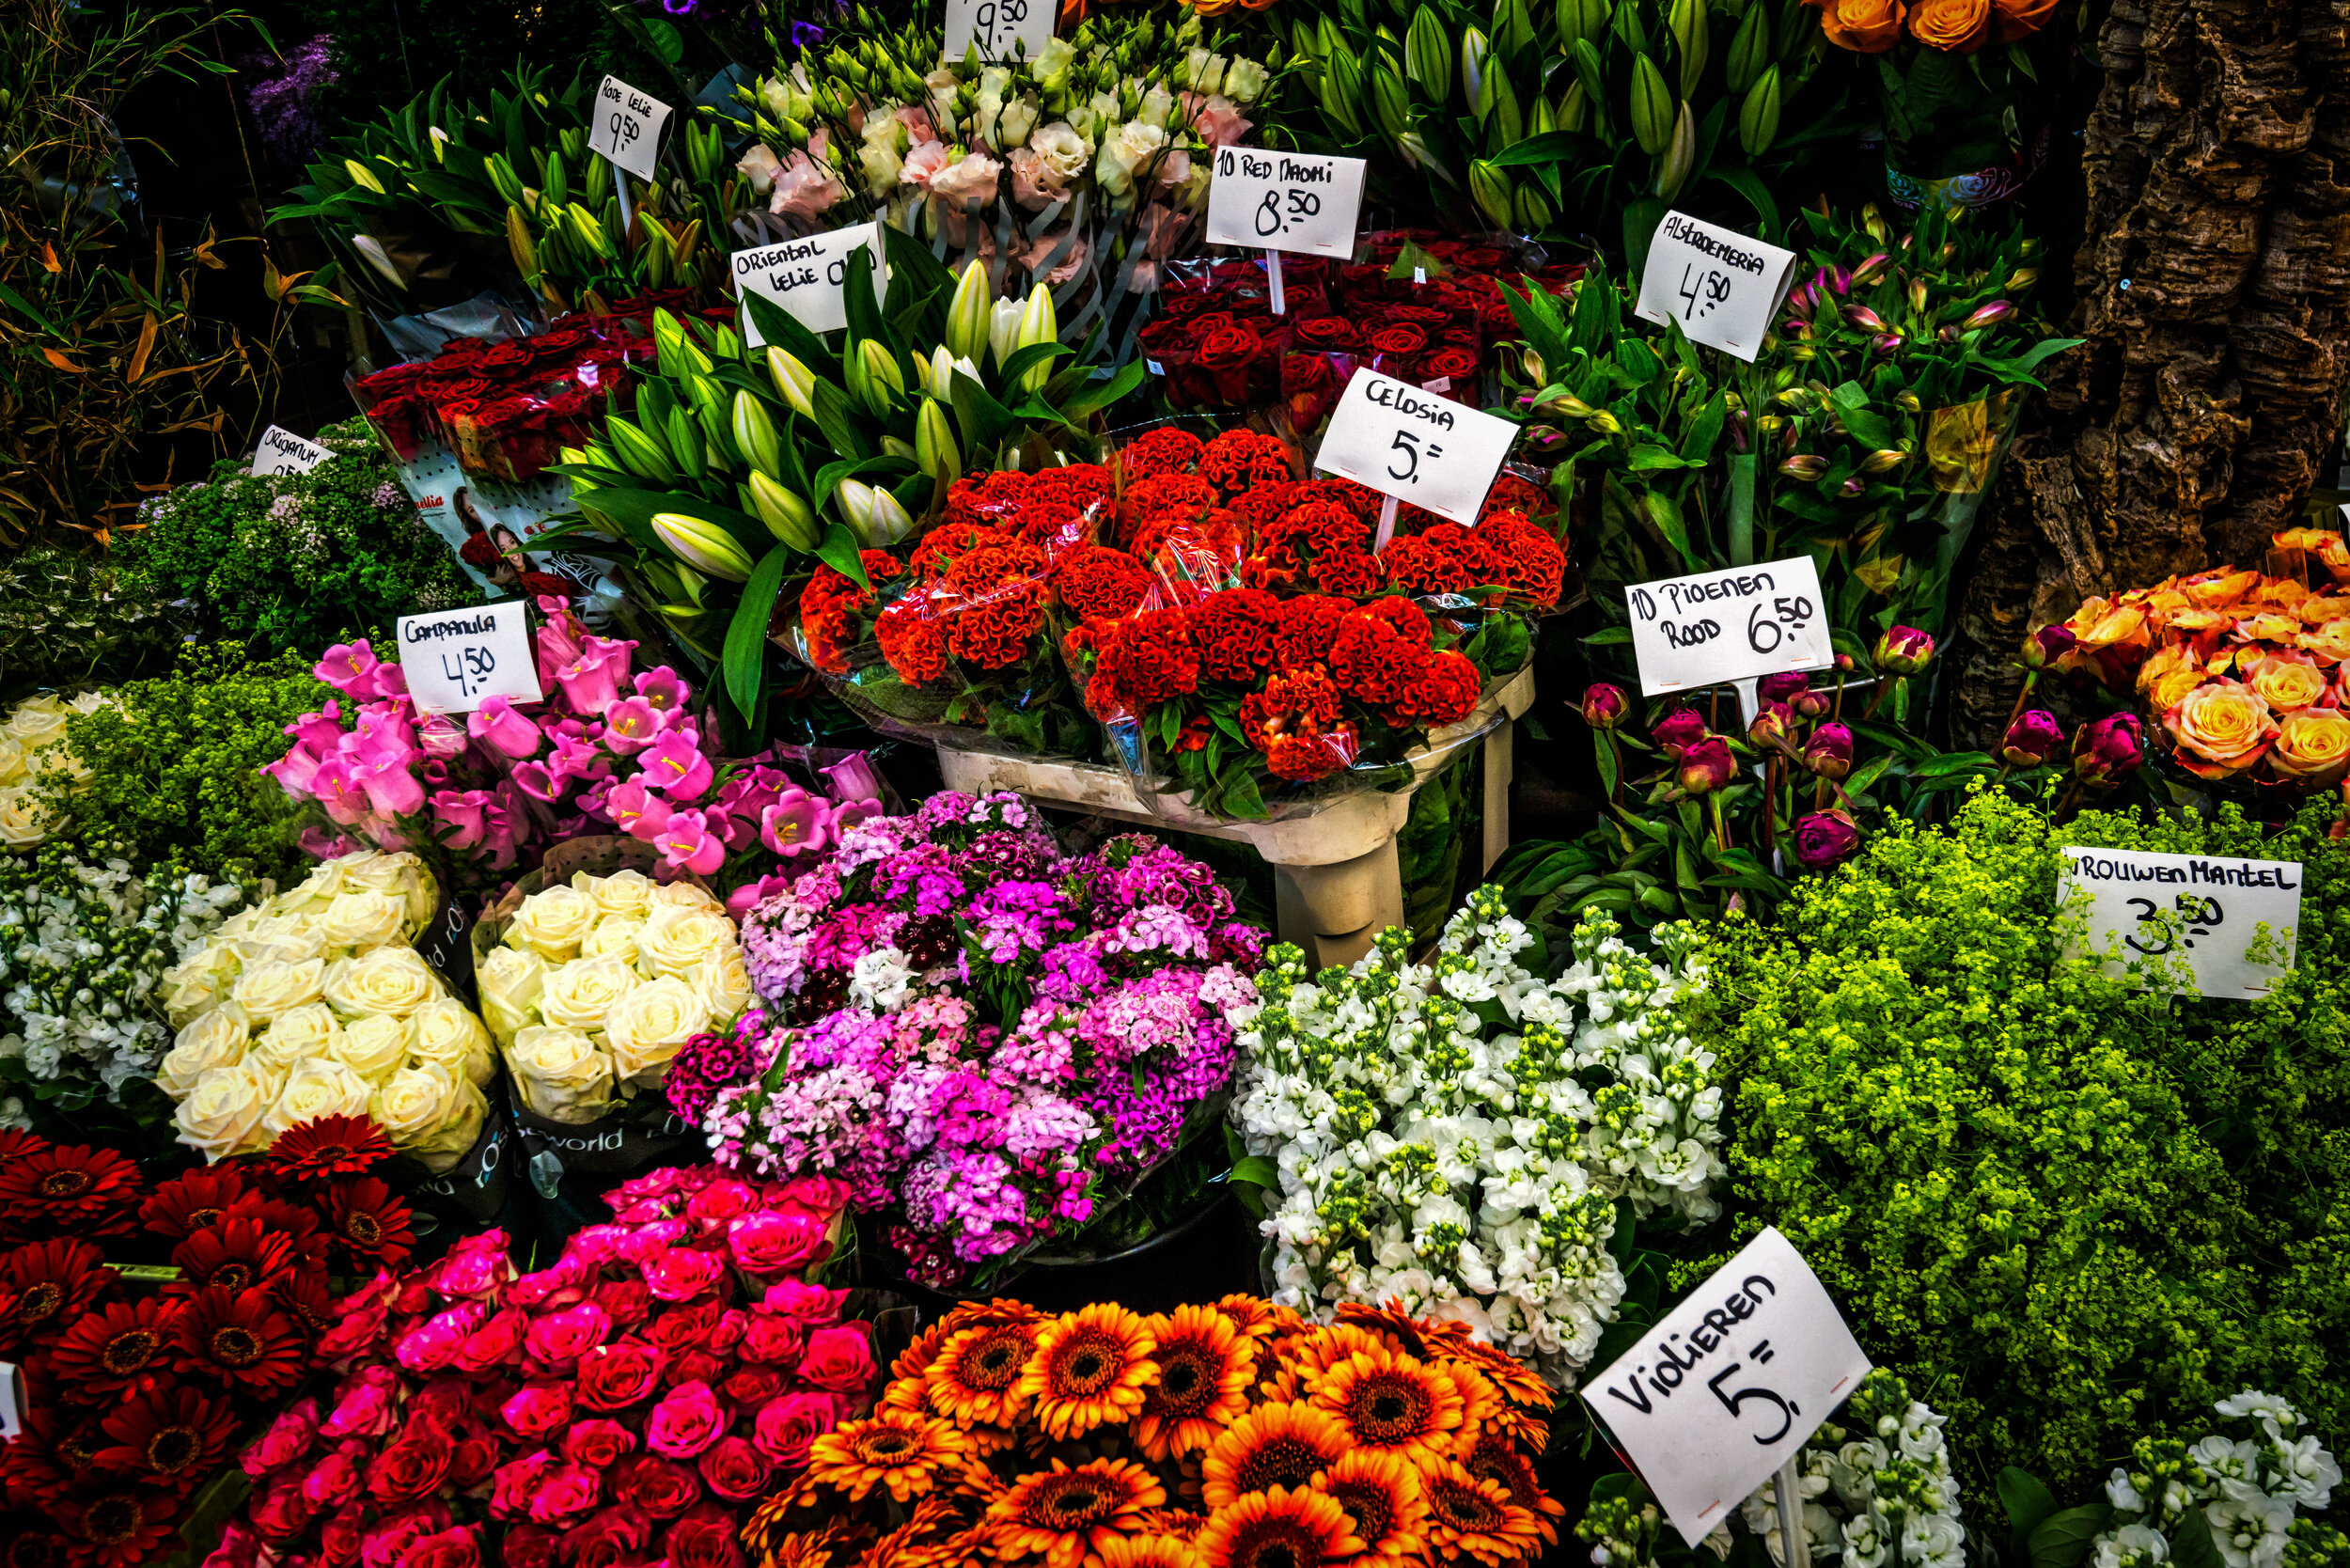 Amsterdam's Flower Market